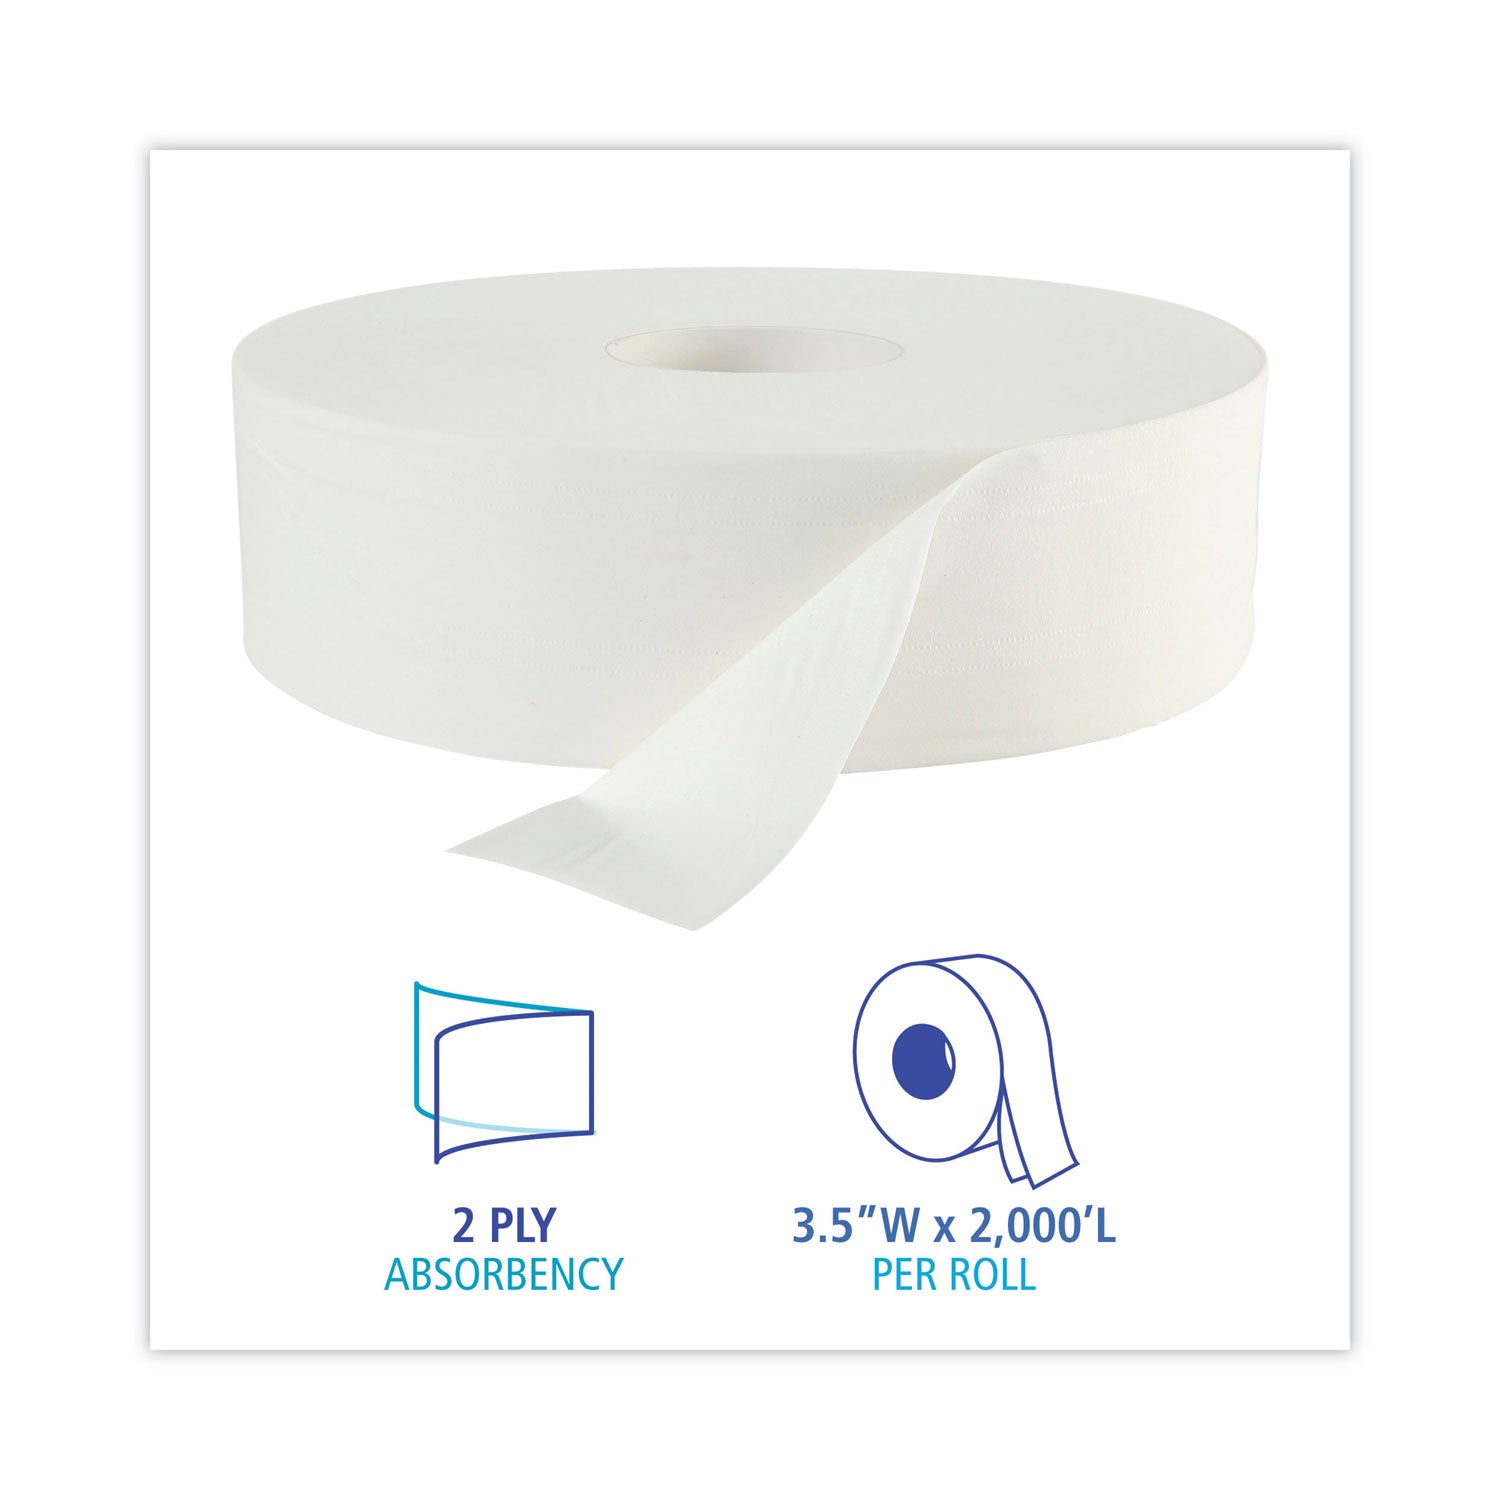 jrt-bath-tissue-jumbo-septic-safe-2-ply-white-35-x-2000-ft-12-dia-6-rolls-carton_bwk6102b - 3